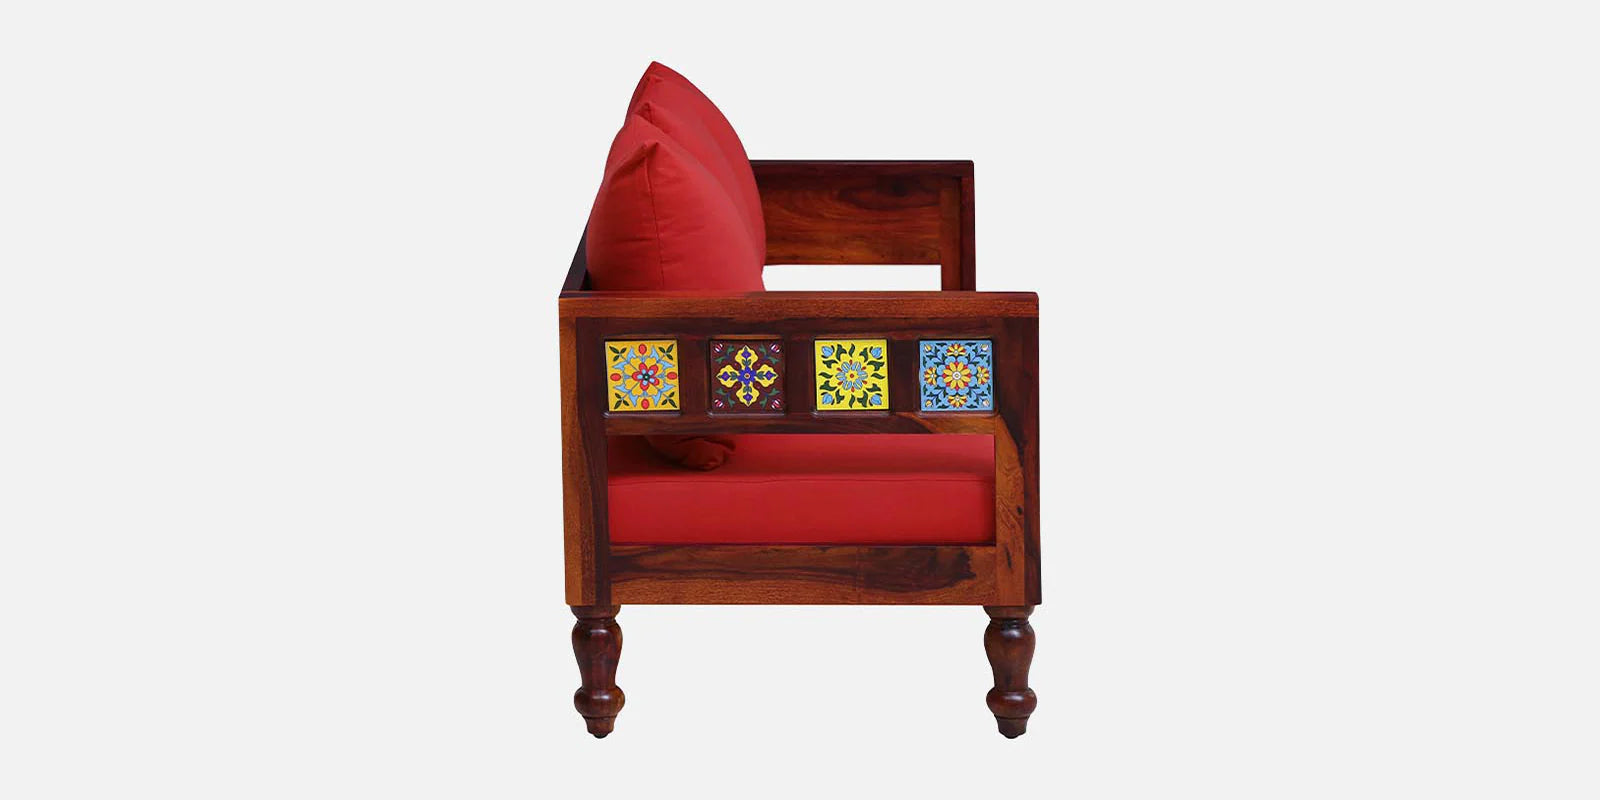 Sheesham Wood 3 Seater Sofa In Honey Oak Finish